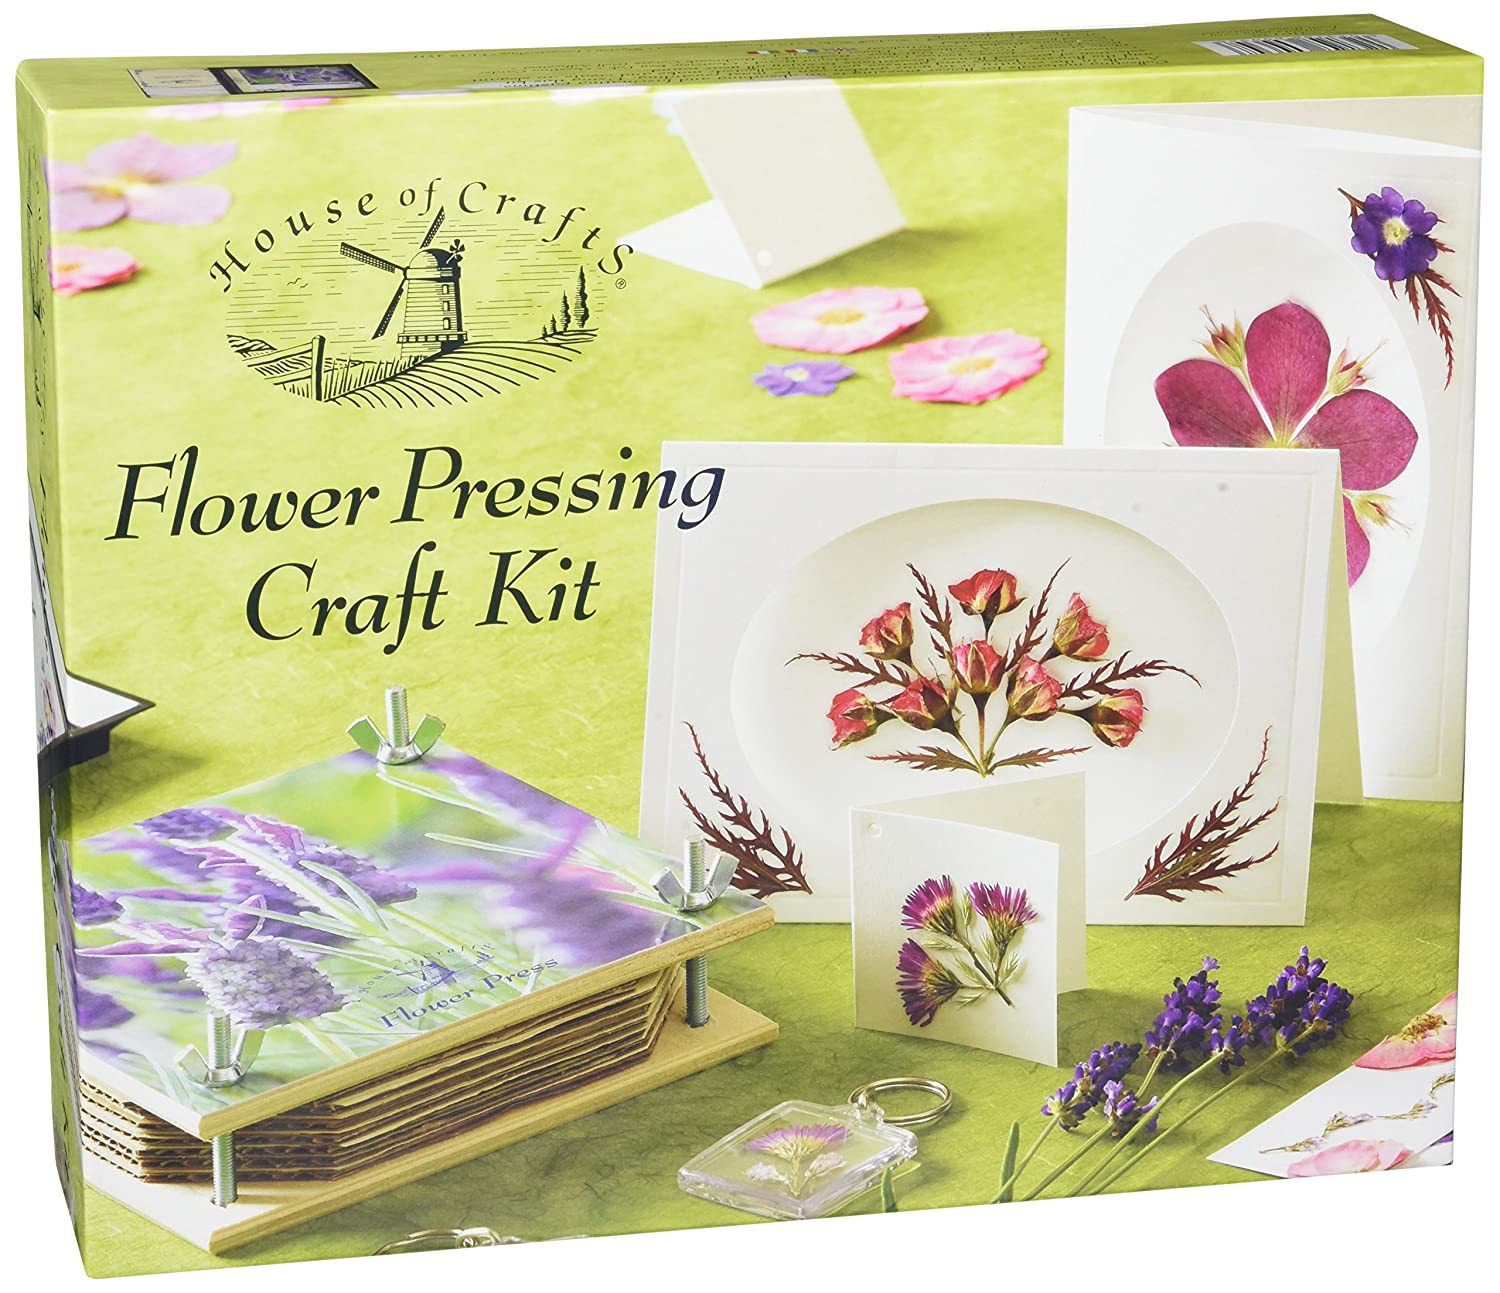 Flower pressing craft kit, Amazon